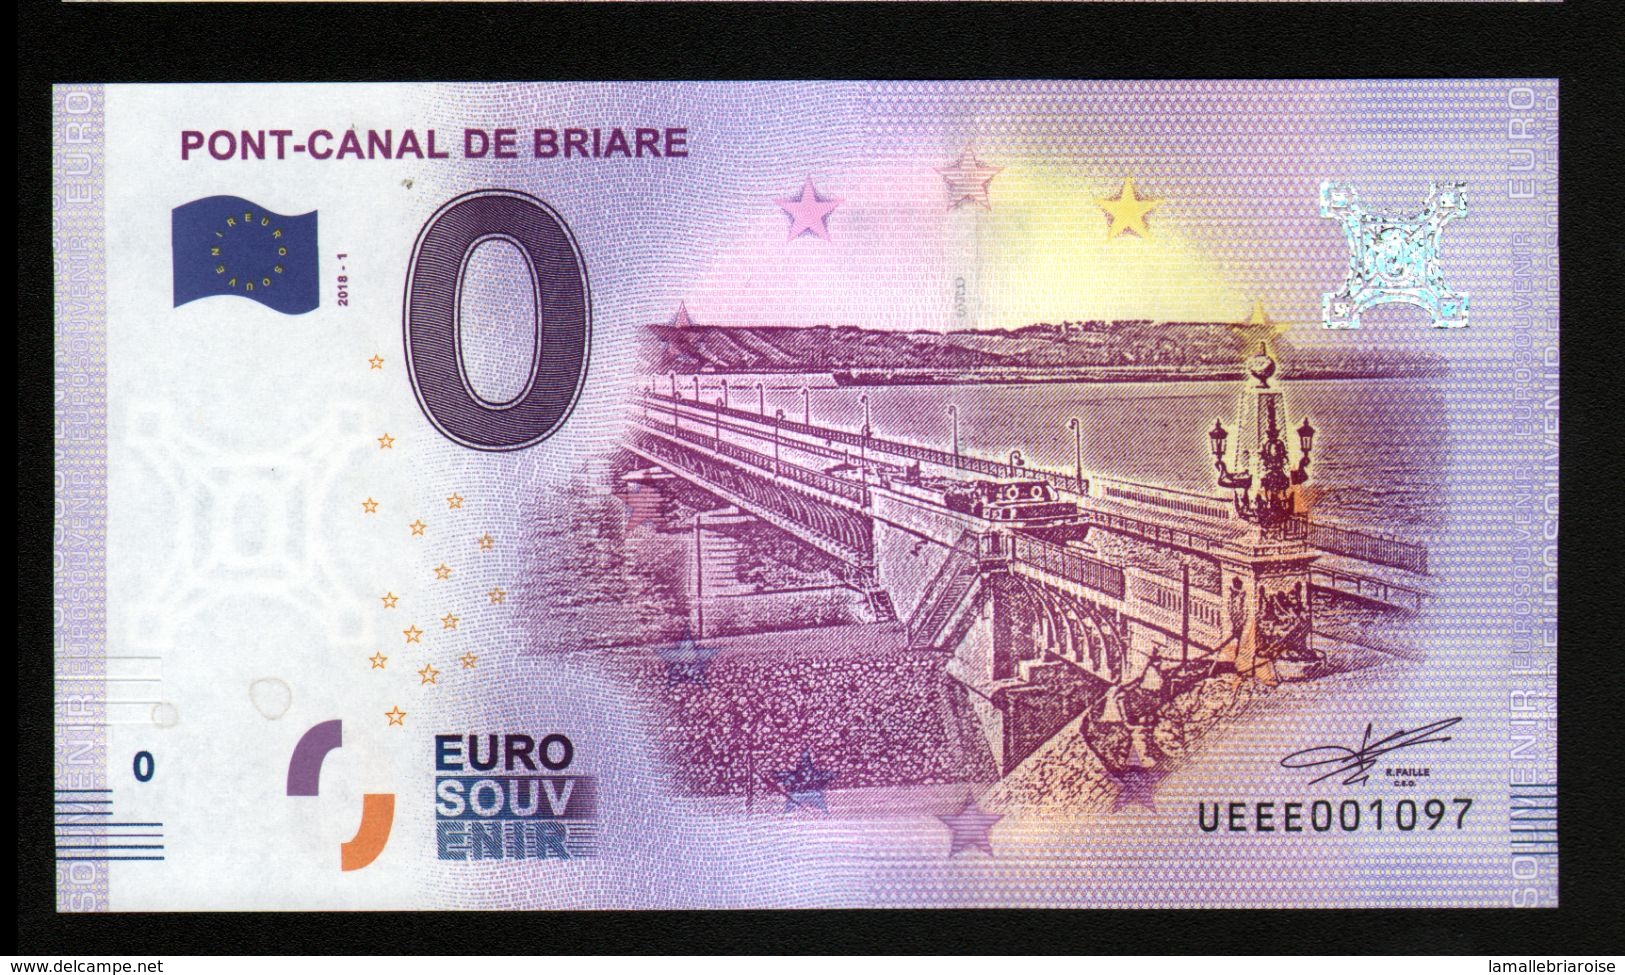 France - Billet Touristique 0 Euro 2018 N°1097 (UEEE001097/5000) - PONT-CANAL DE BRIARE - Privatentwürfe